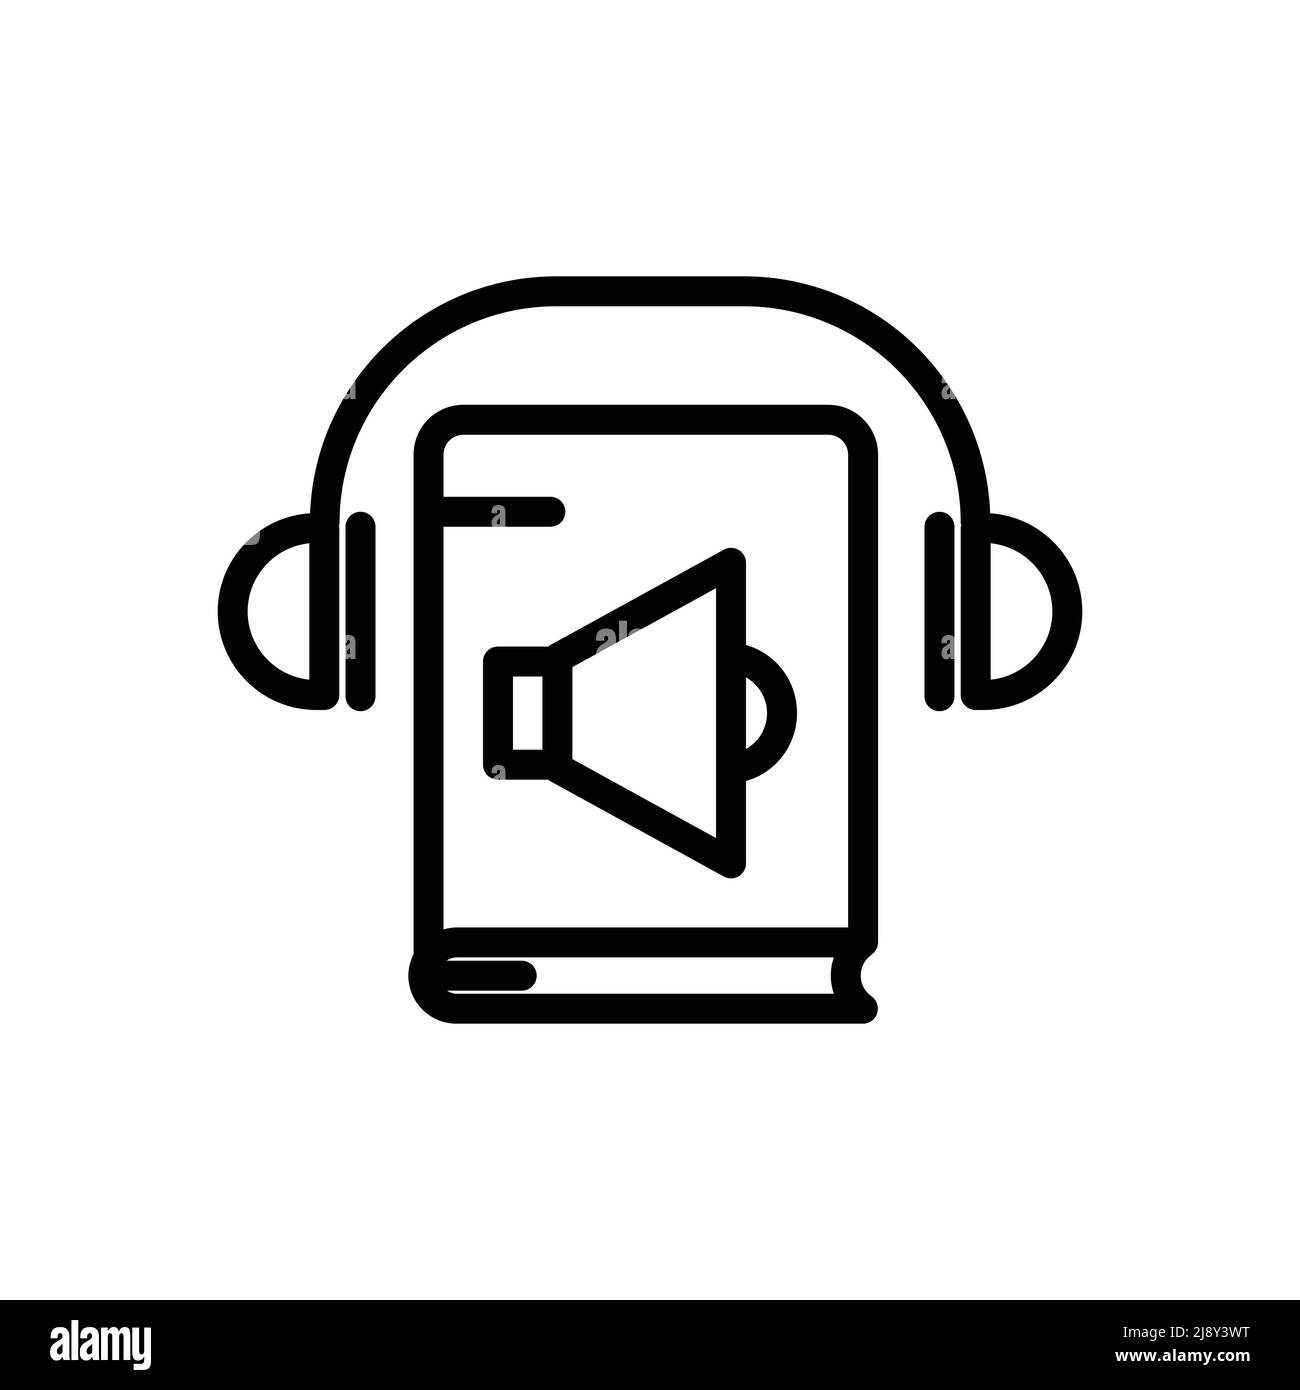 Audio book icon vector. book, megaphone, headset. Line icon style. Simple design illustration editable Stock Vector